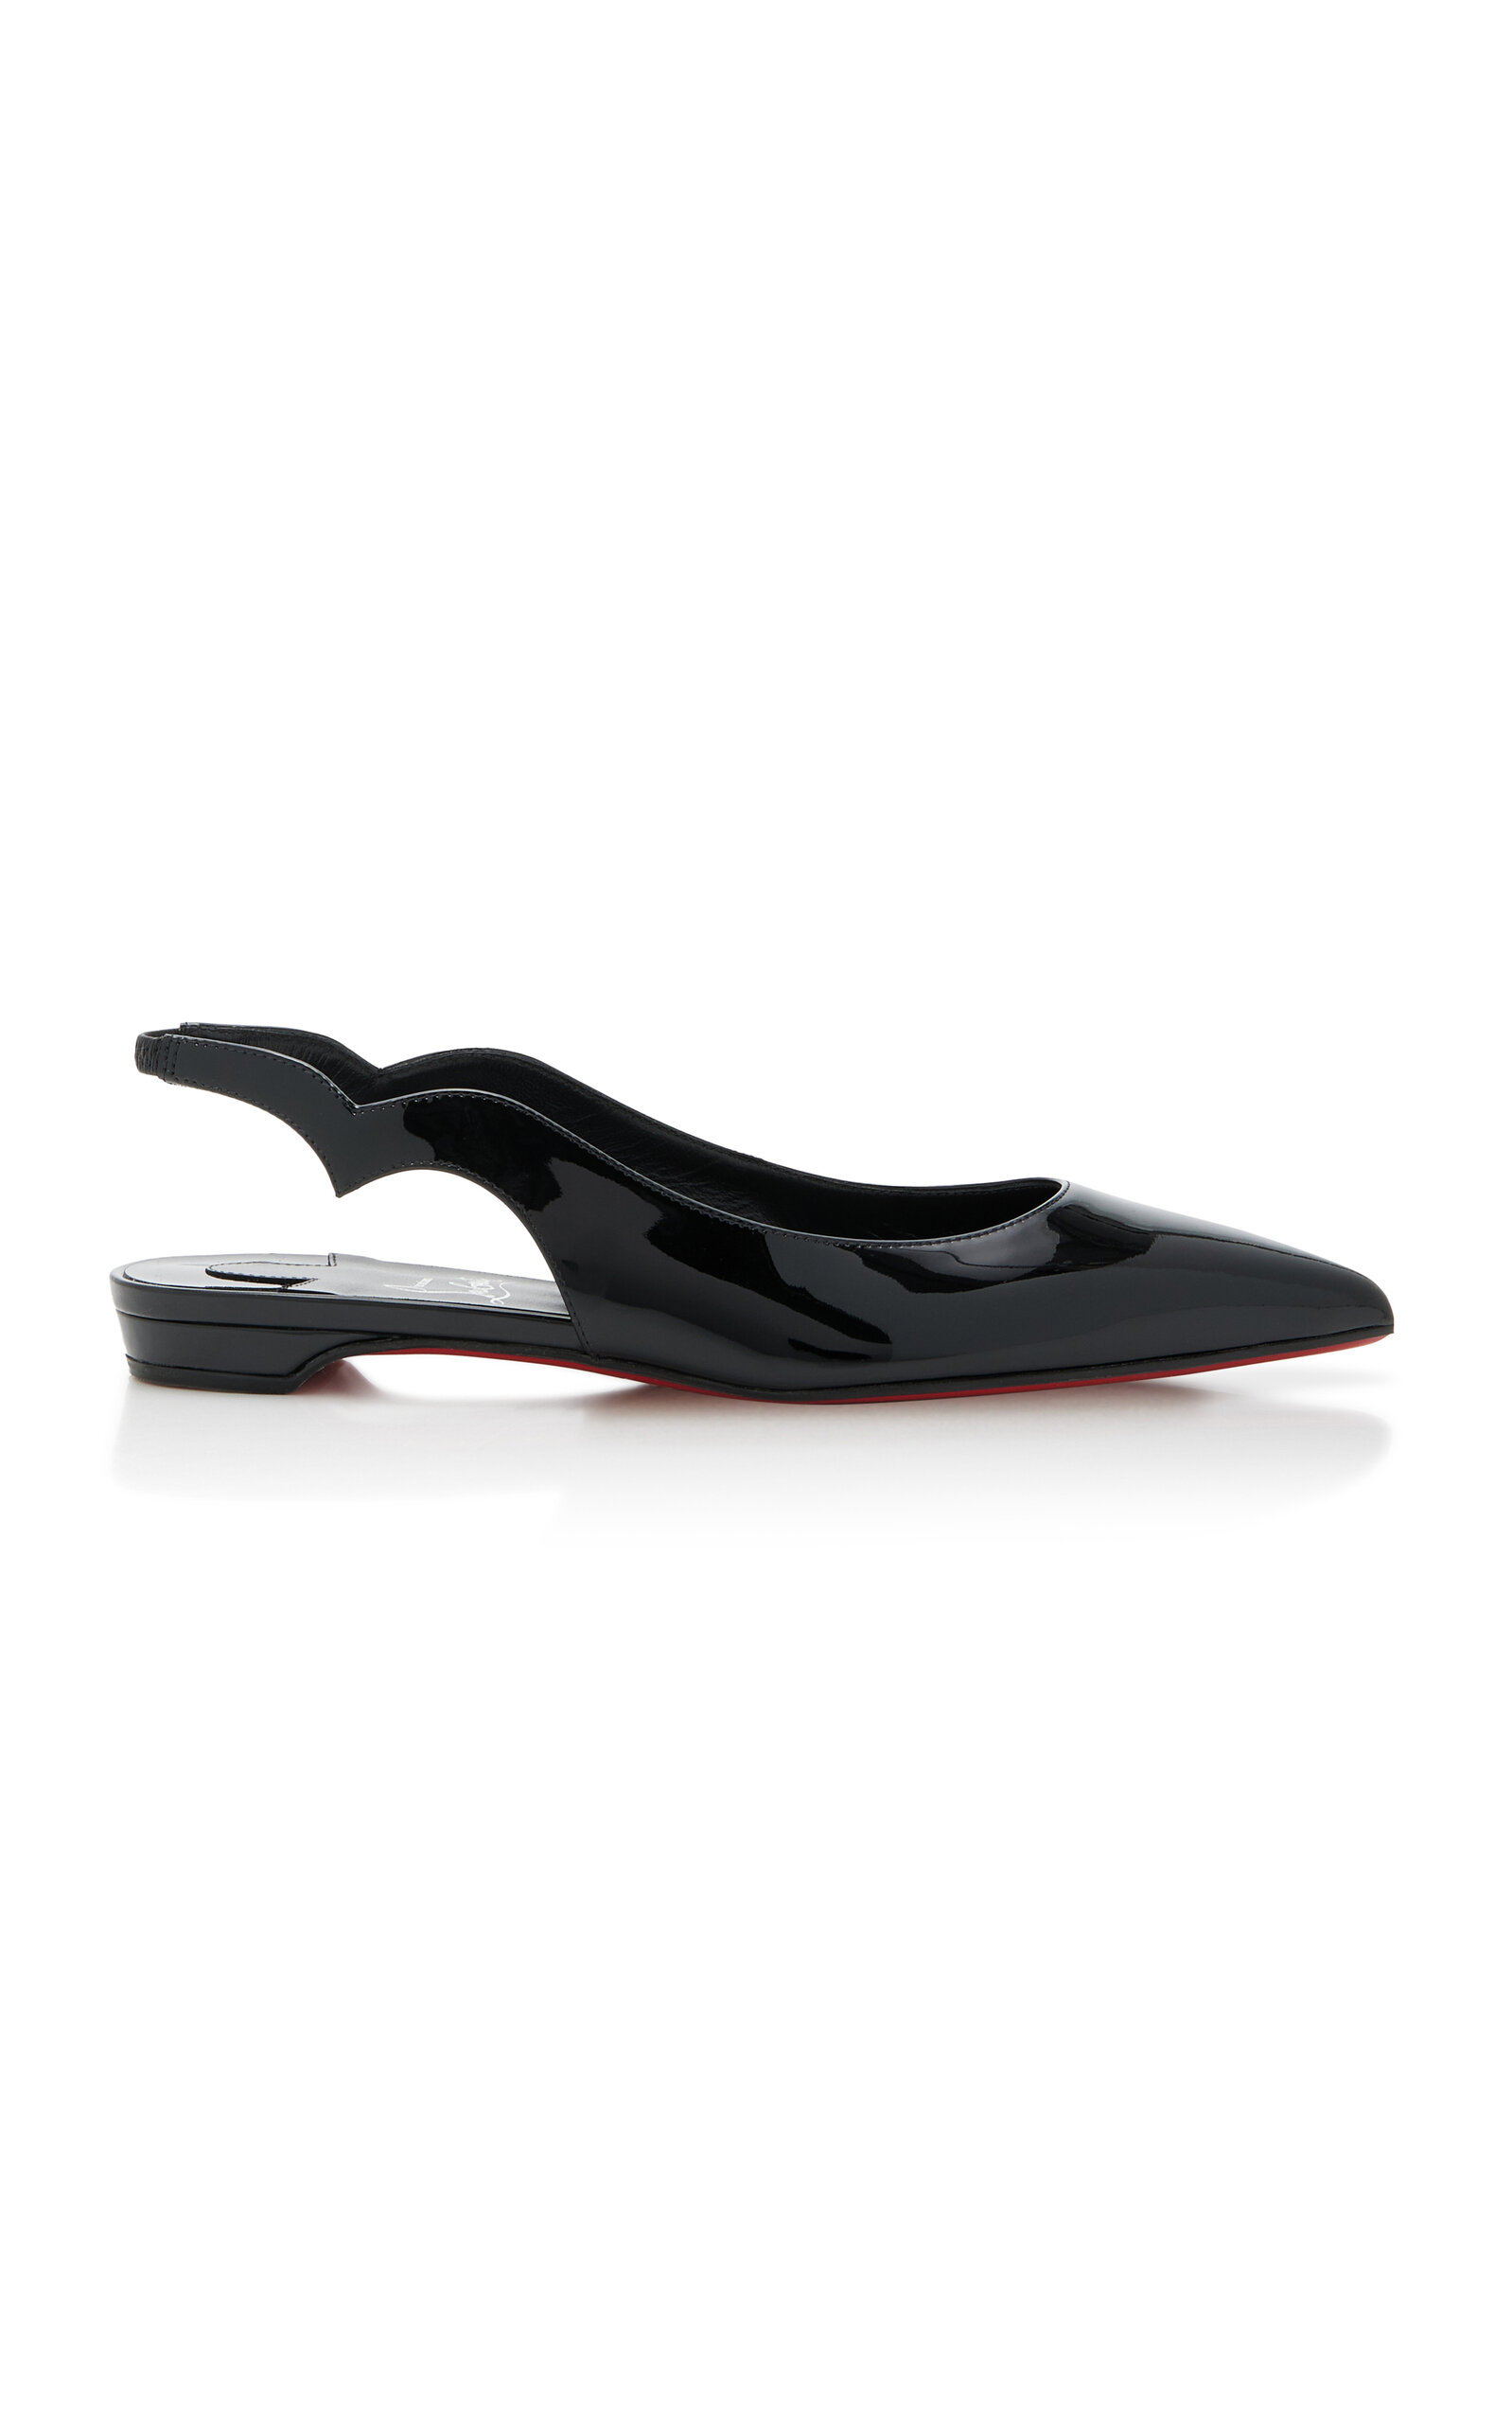 Christian Louboutin Supramariza Red Sole Patent Leather Platform Sandals, Galactiqueen, Women's, 35EU, Sandals Platform Sandals